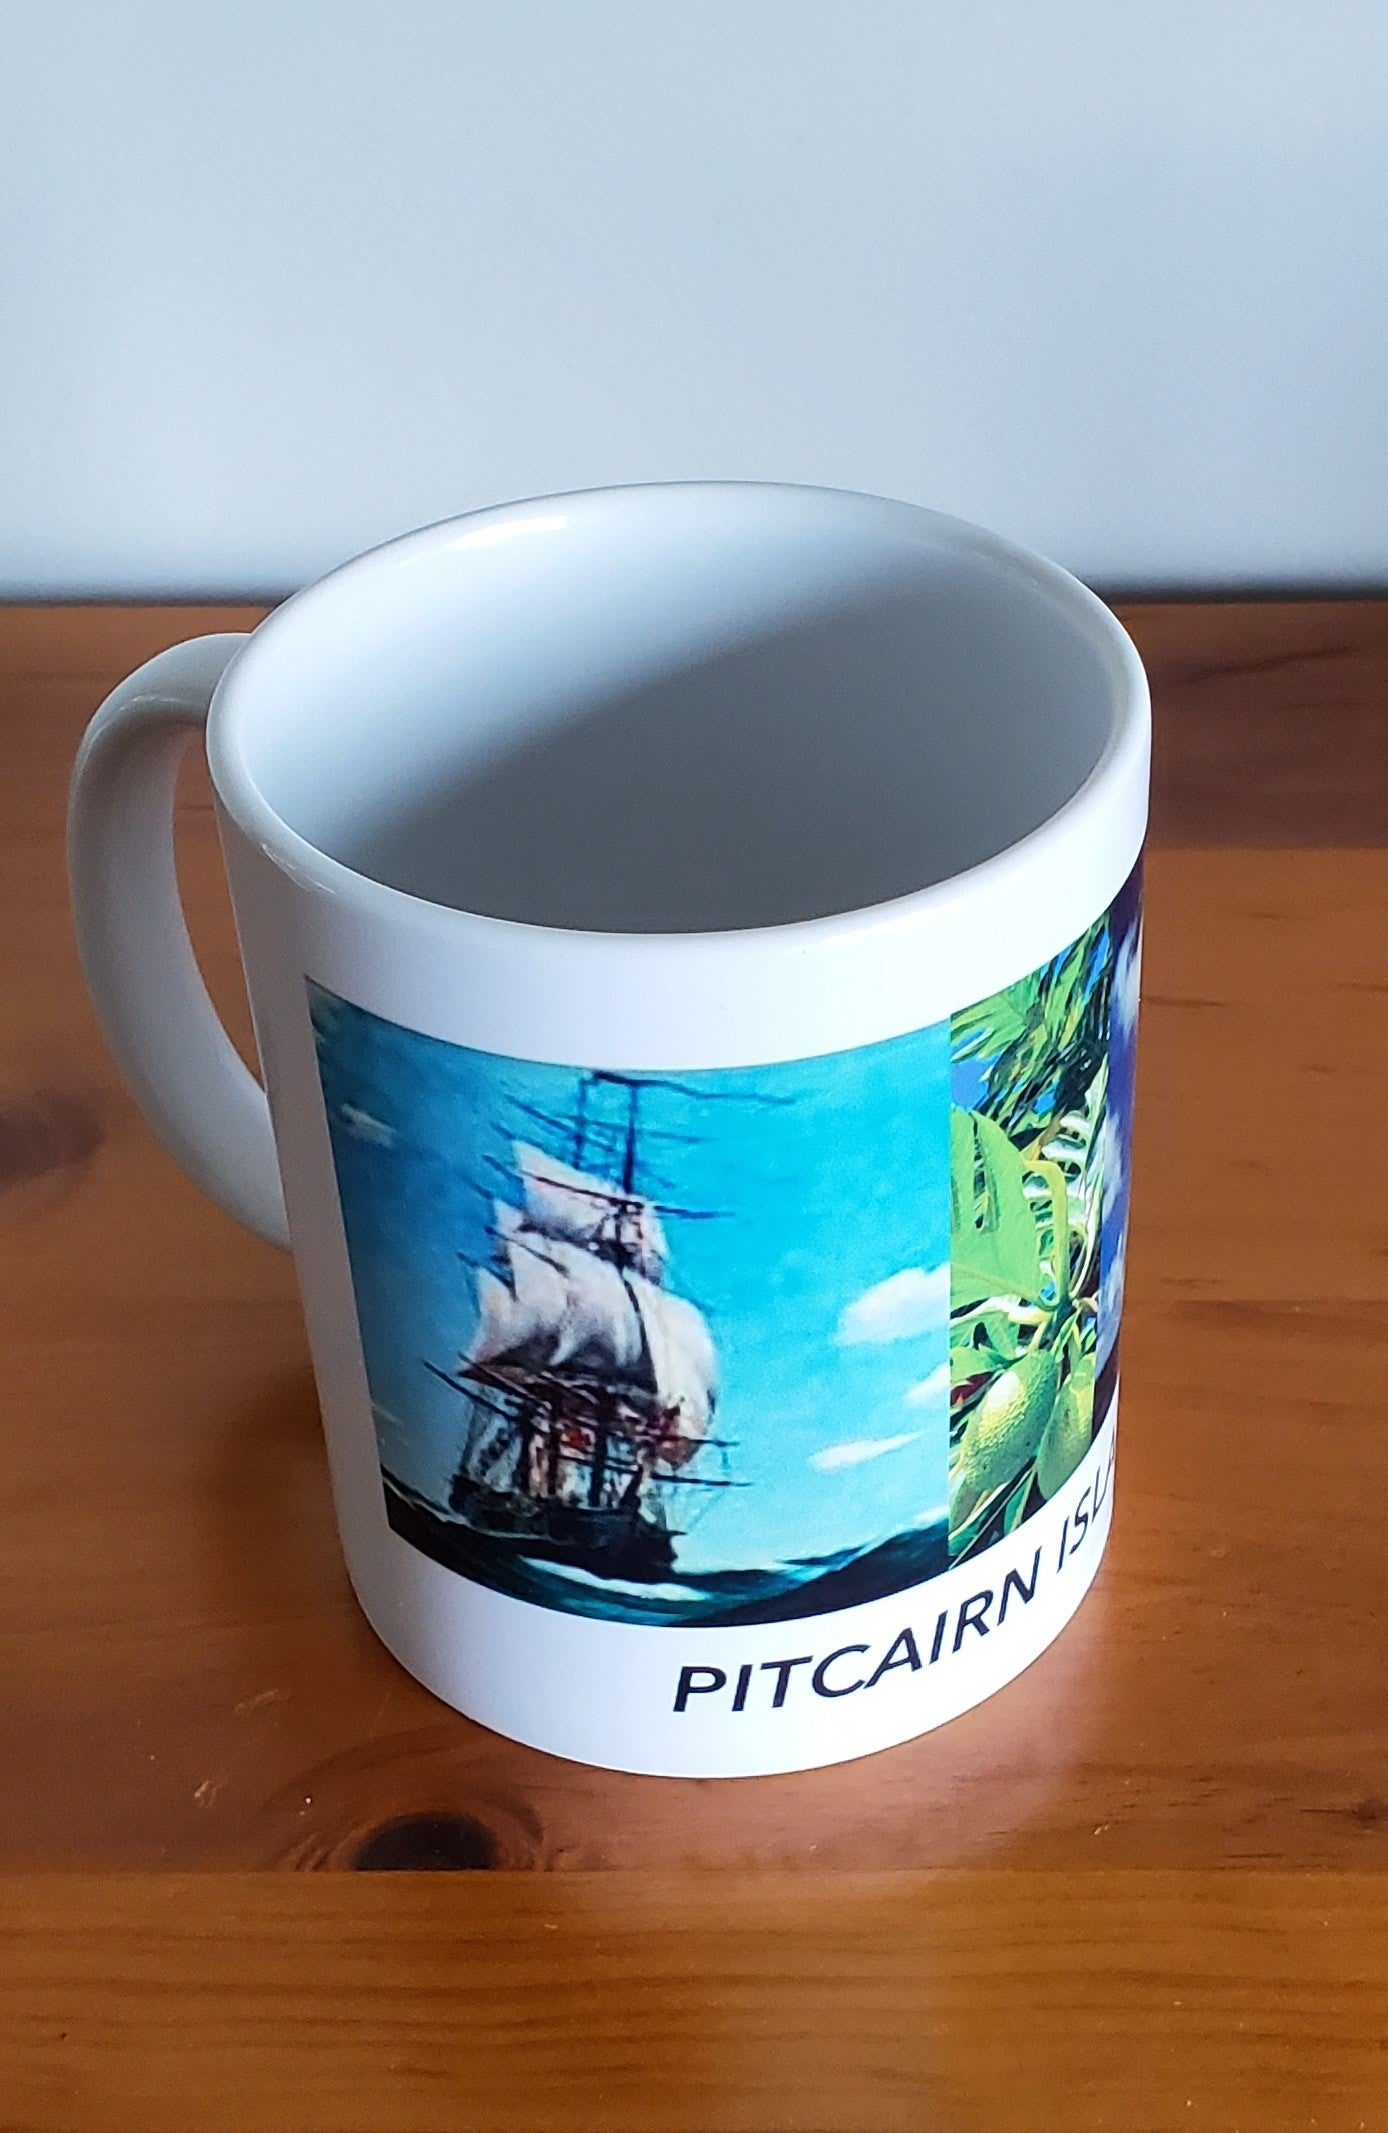 Pitcairn Island Kaffeetasse - 2 Kopfgelder